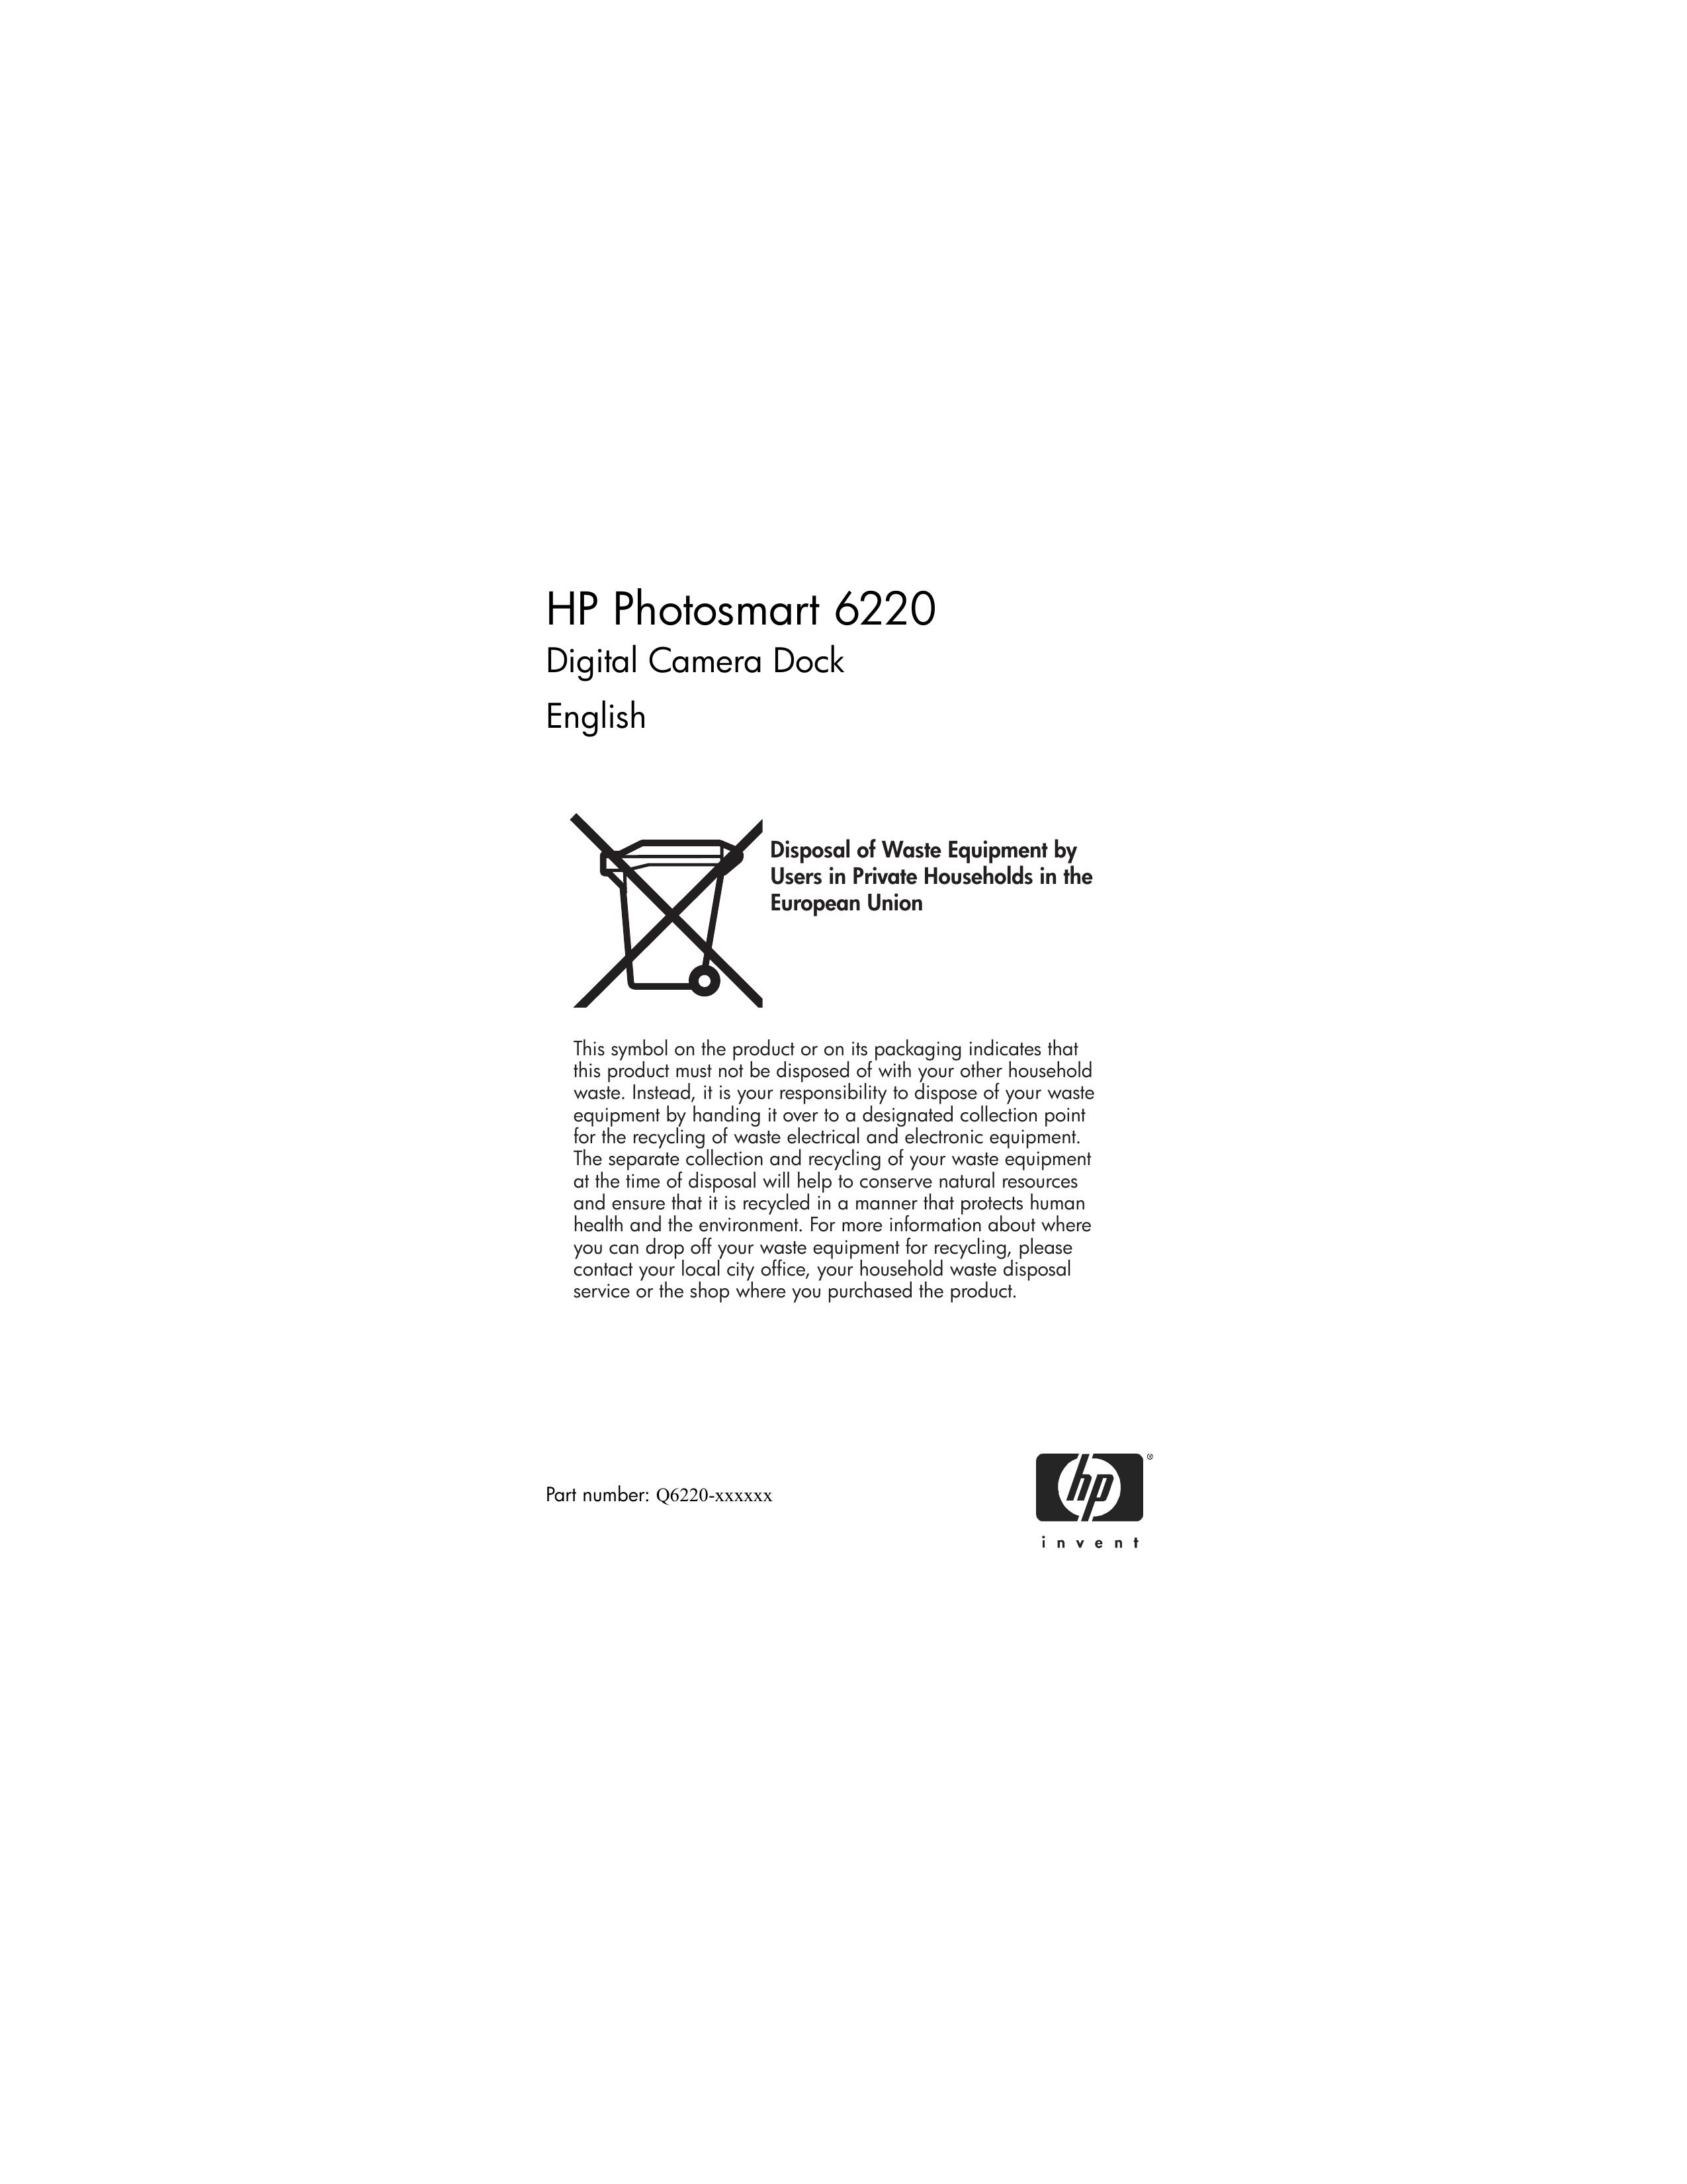 HP (Hewlett-Packard) YTH 2242 T Camera Accessories User Manual